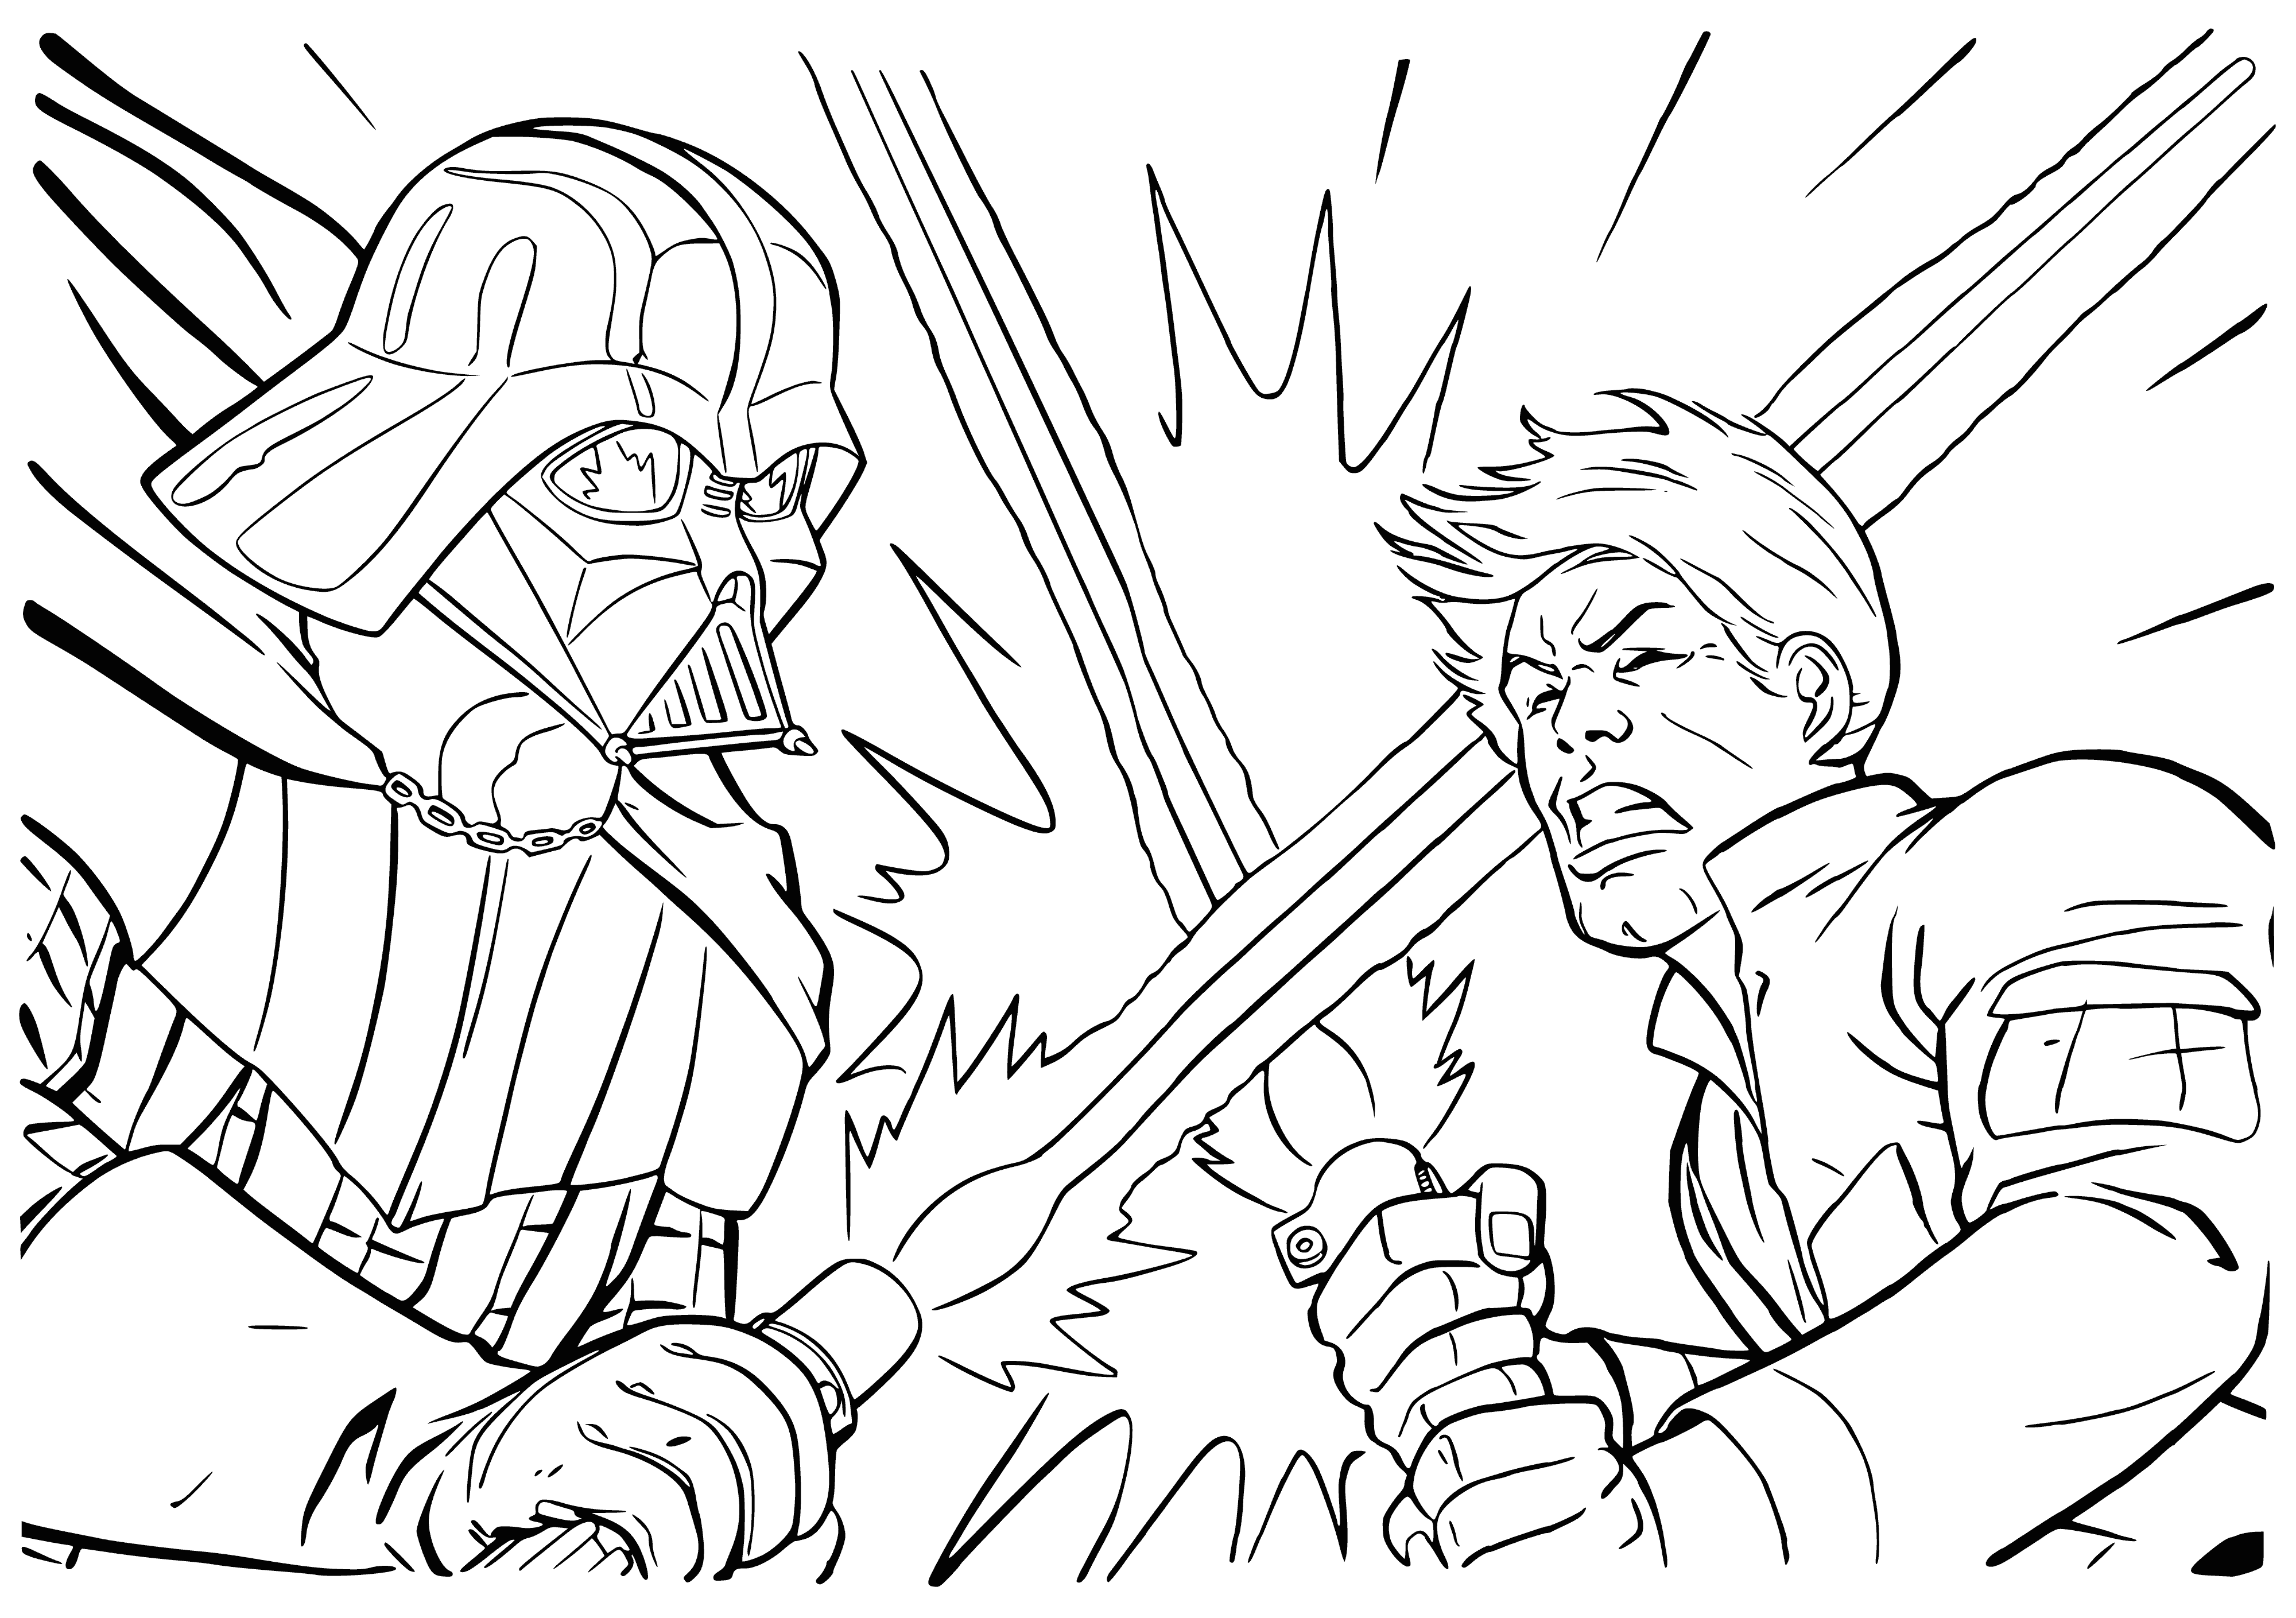 Luke Skywalker fighting Darth Vader coloring page